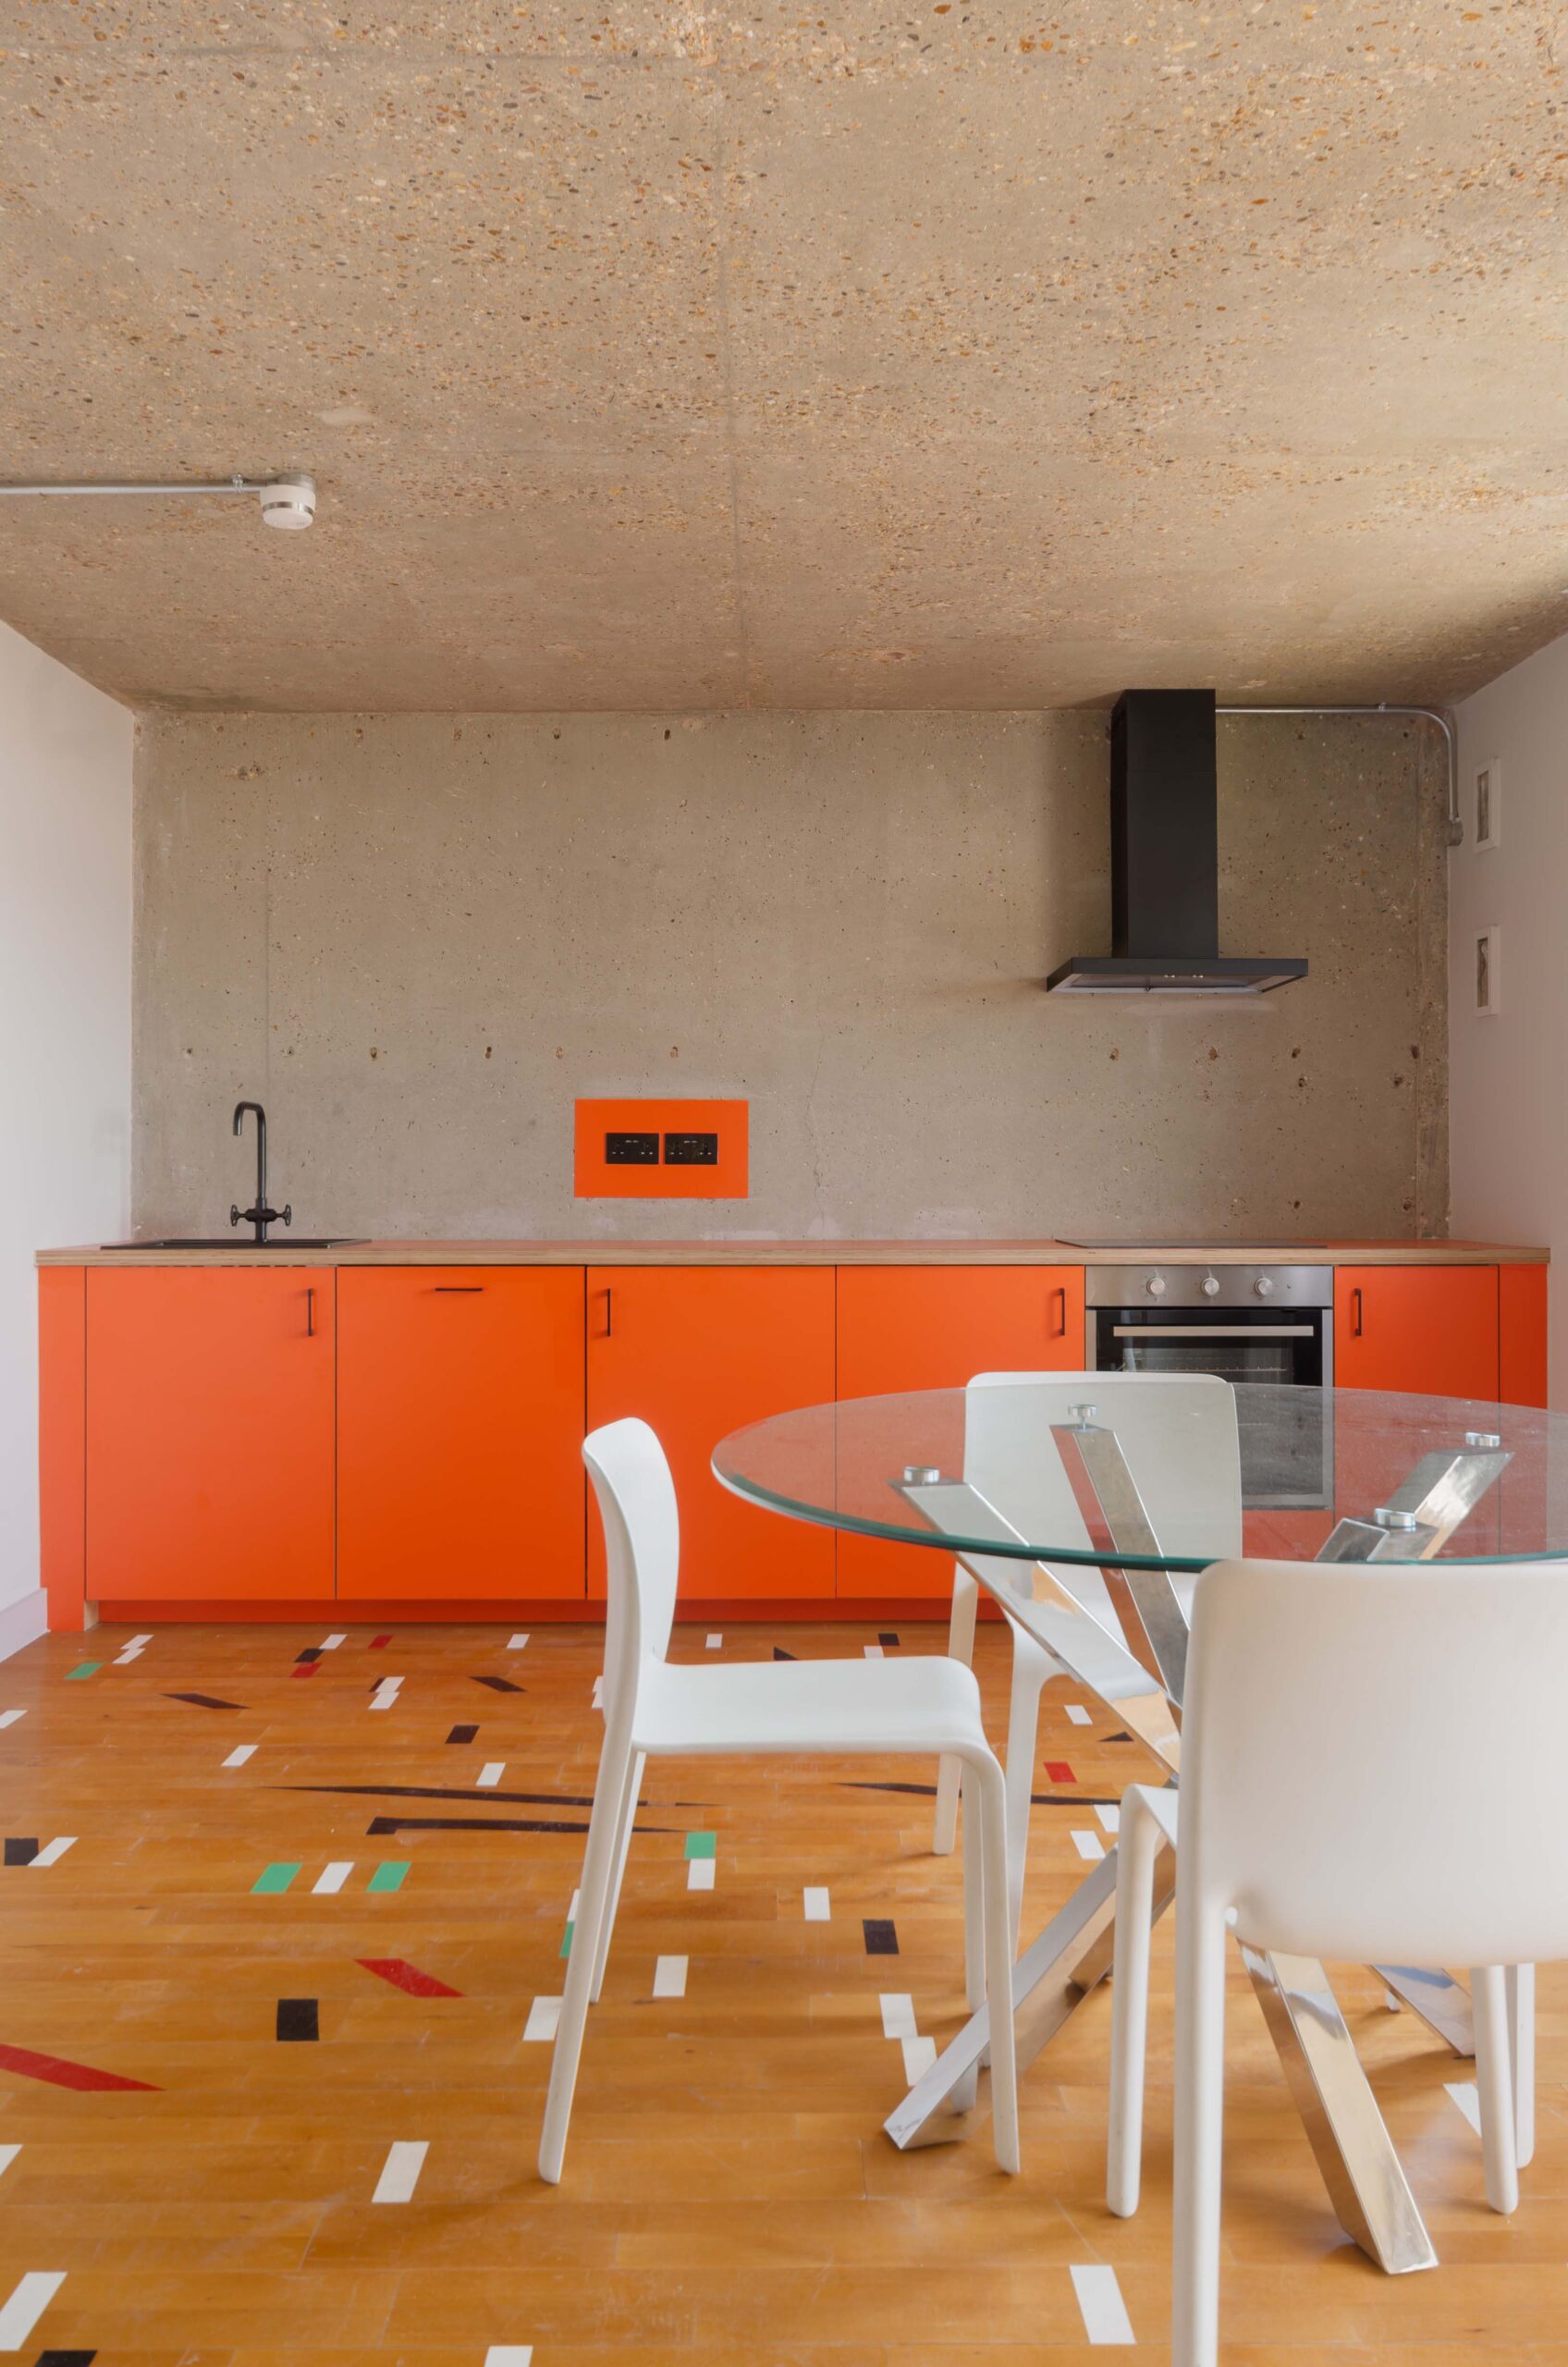 For Rent: Trellick Tower North Kensington W10 brutalist interior design and modern kitchen with orange cabinets